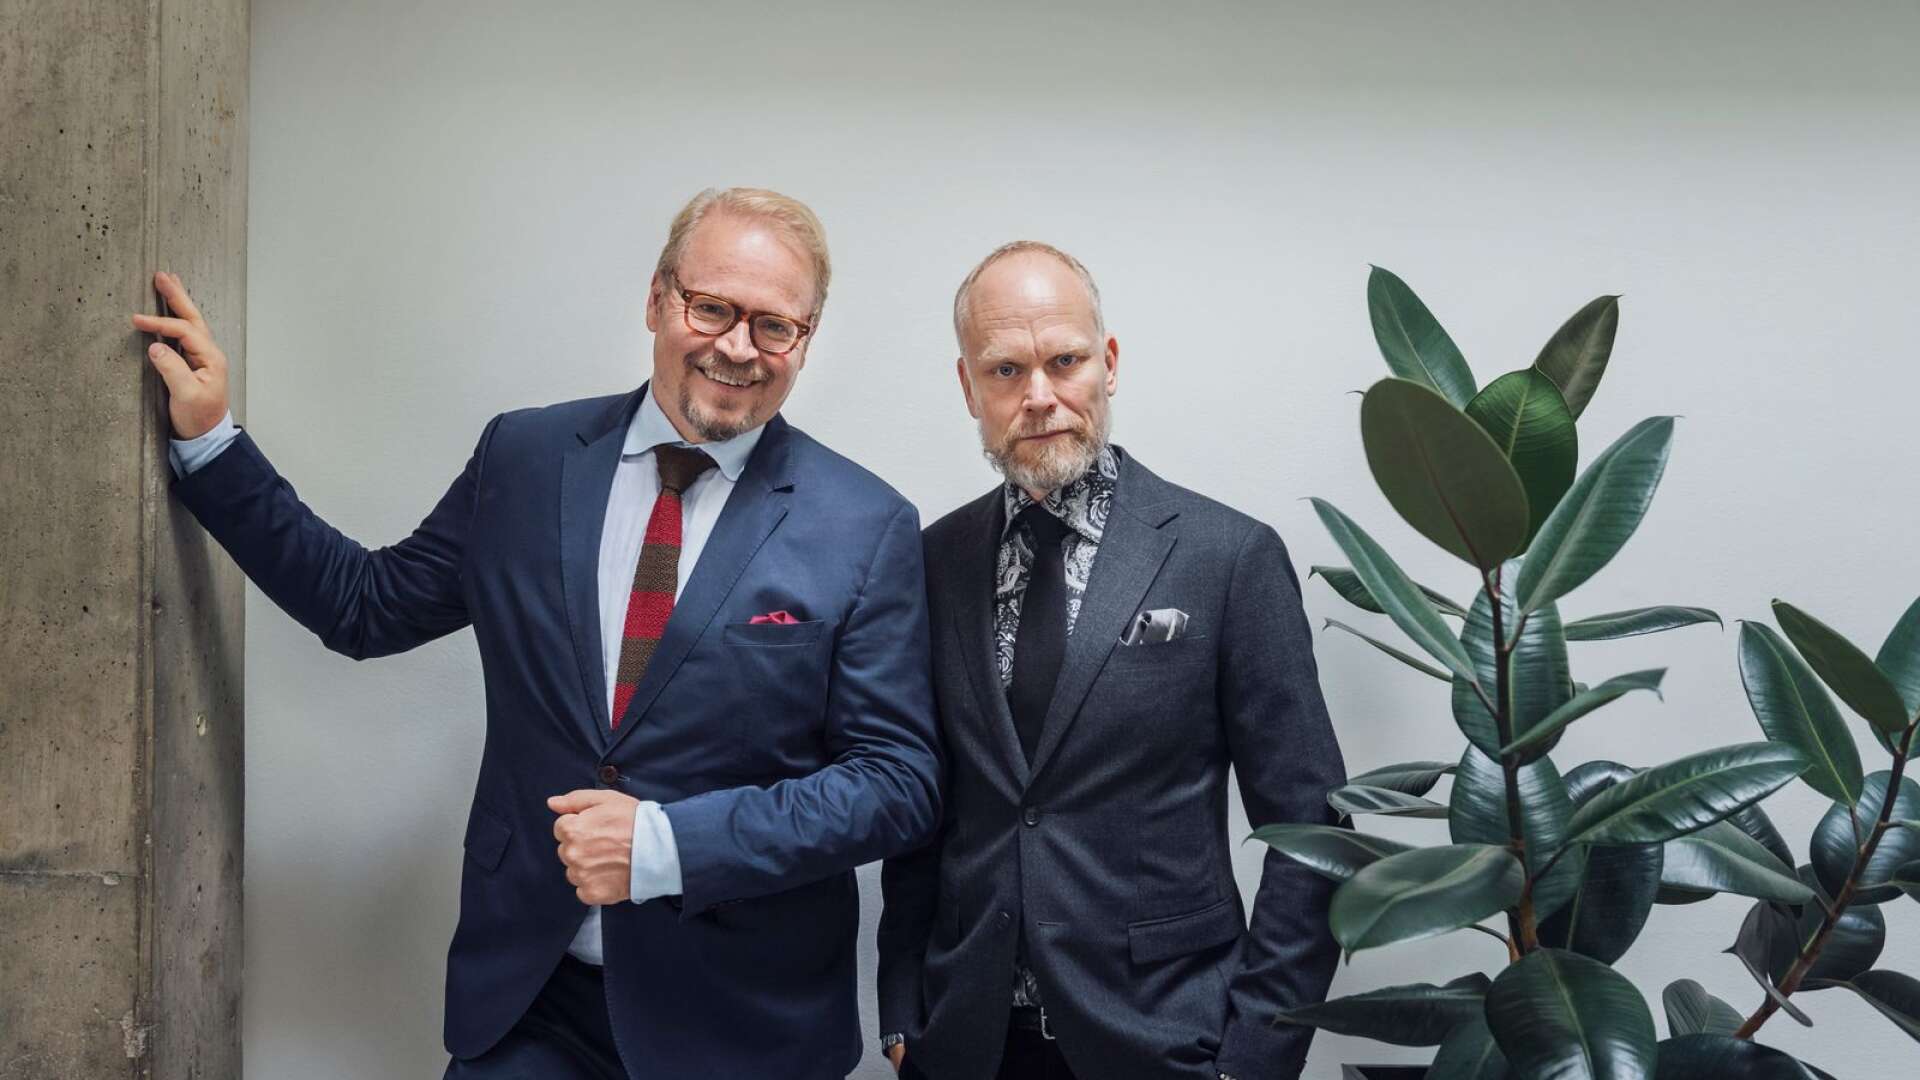 På spårets programledare Fredrik Lindström och Kristian Luuk.